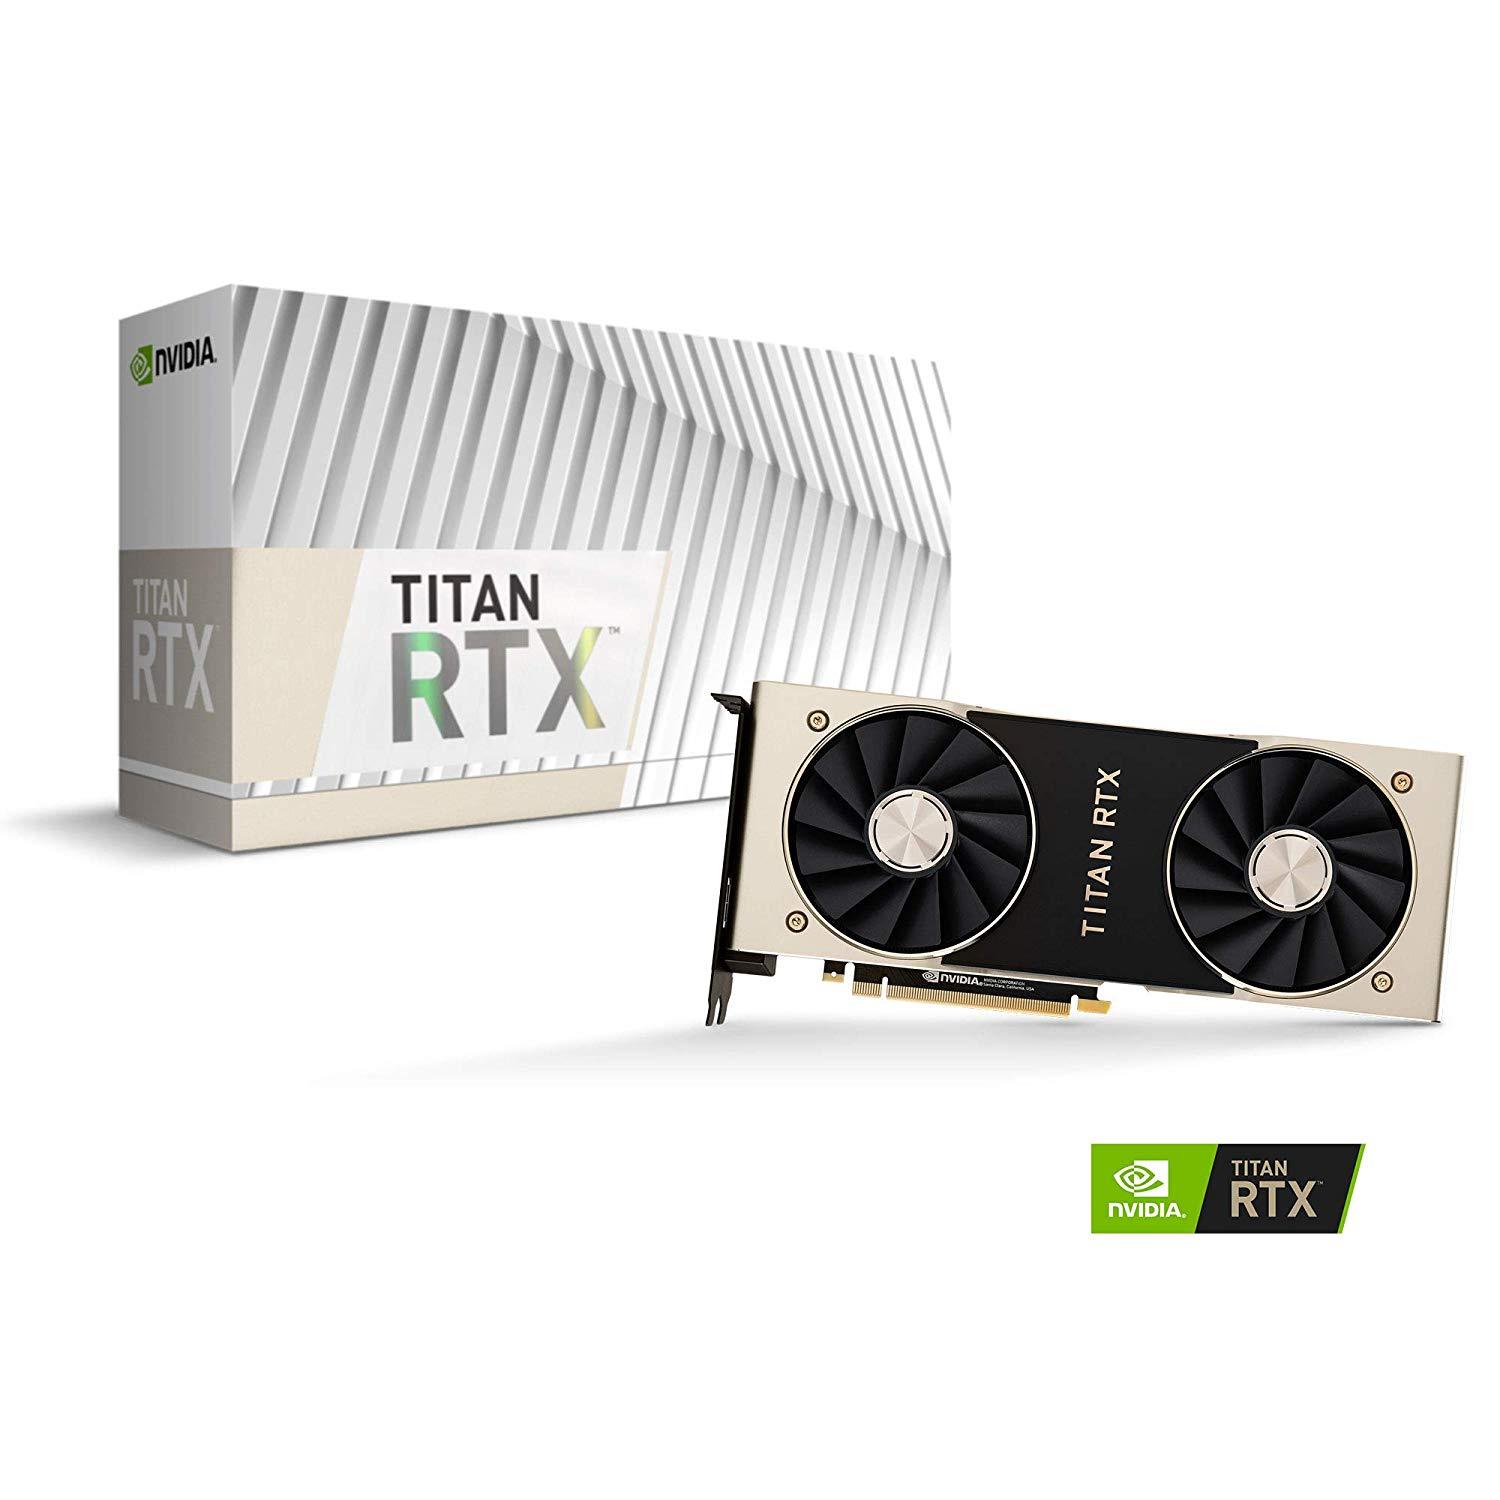 Nvidia GeForce RTX Titan GDDR6 24GB PCI-E Gen 4x4 - Graphics Card - Store 974 | ستور ٩٧٤